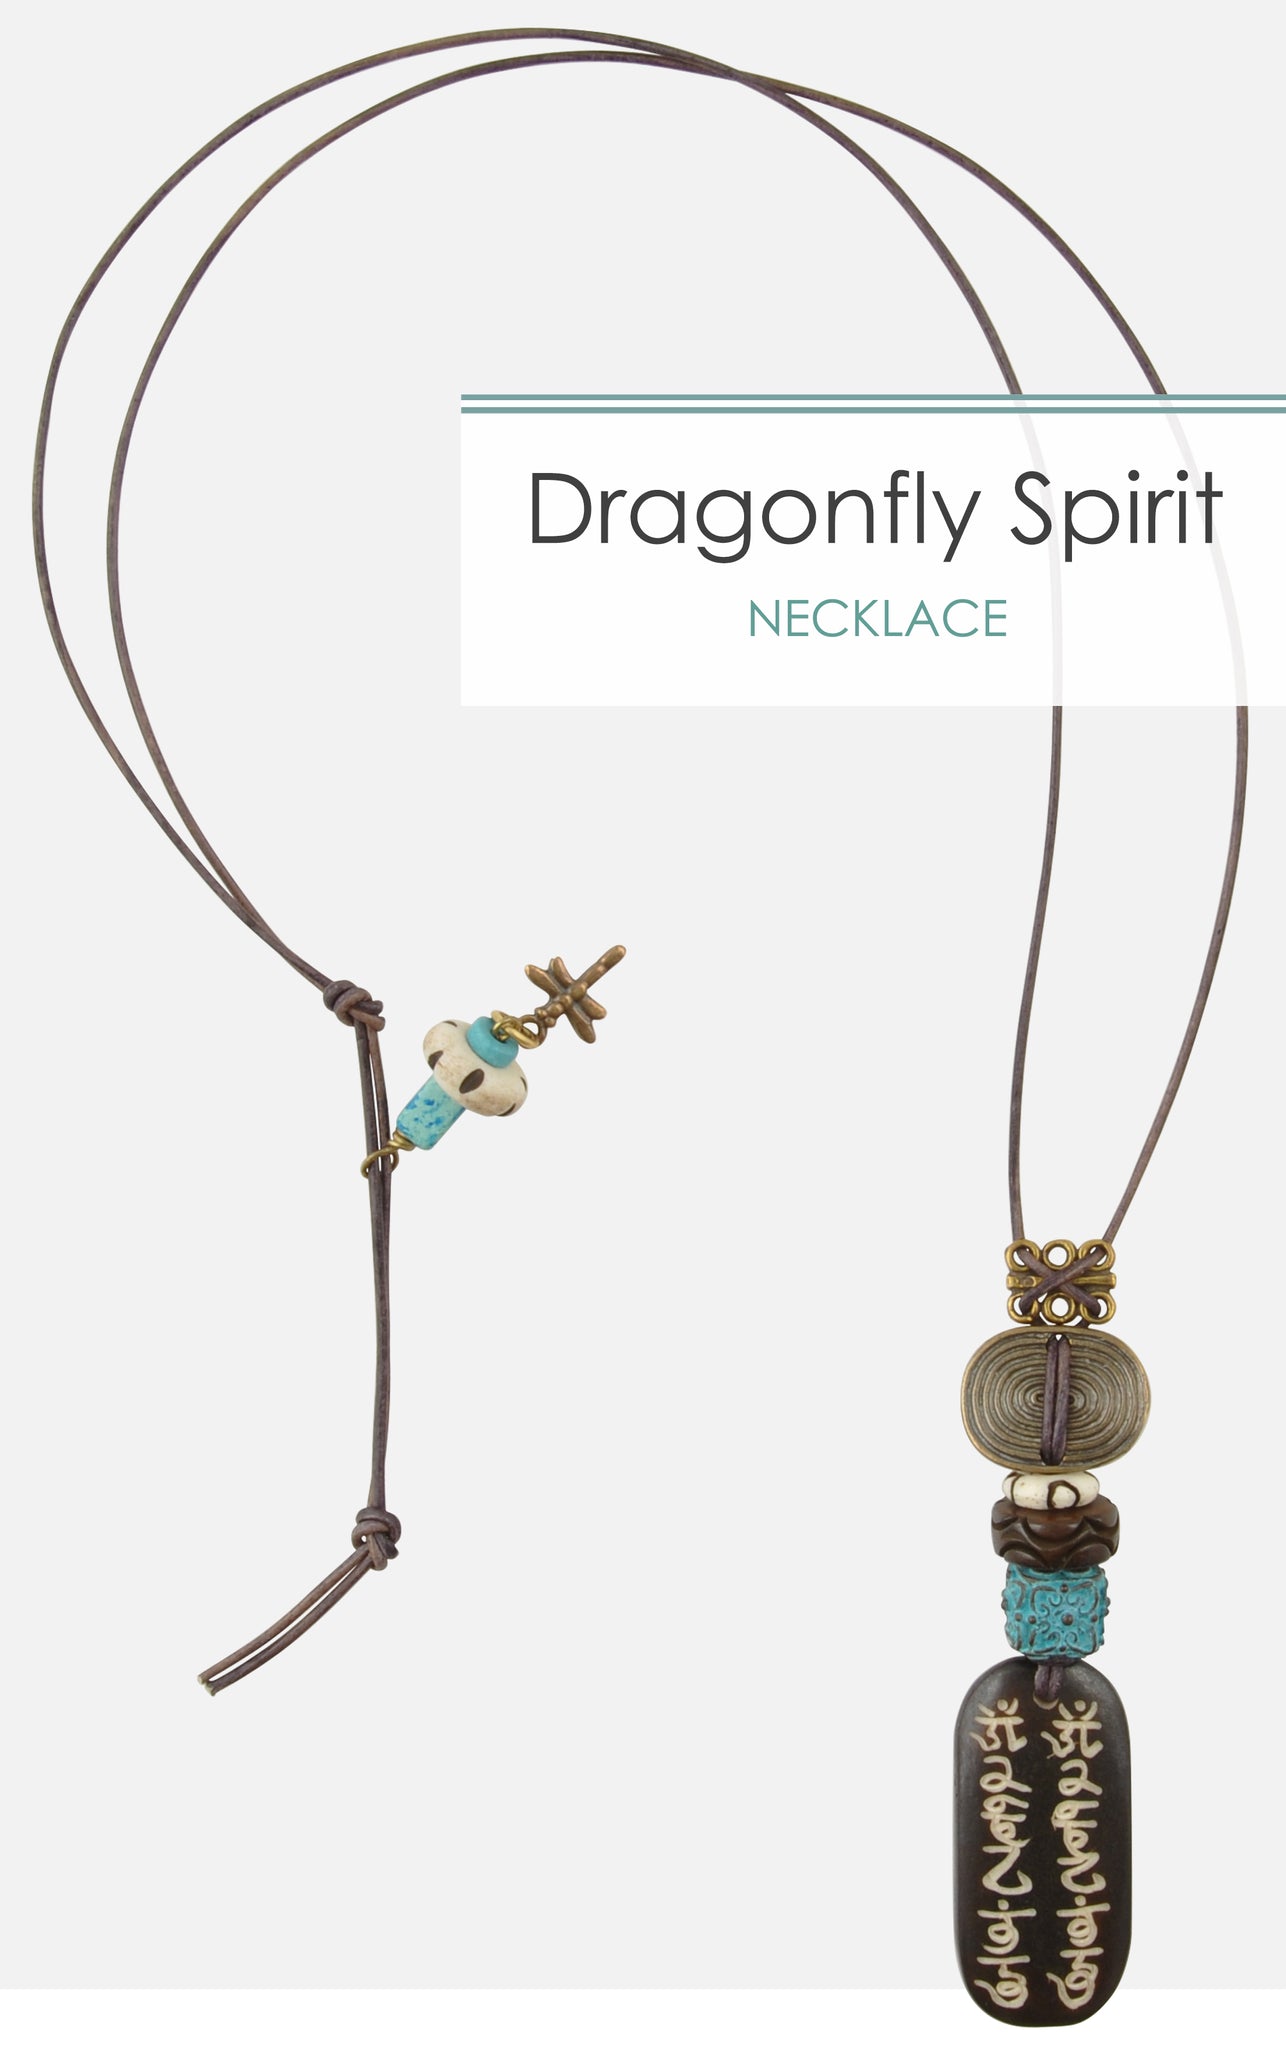 Dragonfly Spirit Necklace choiyeonhee